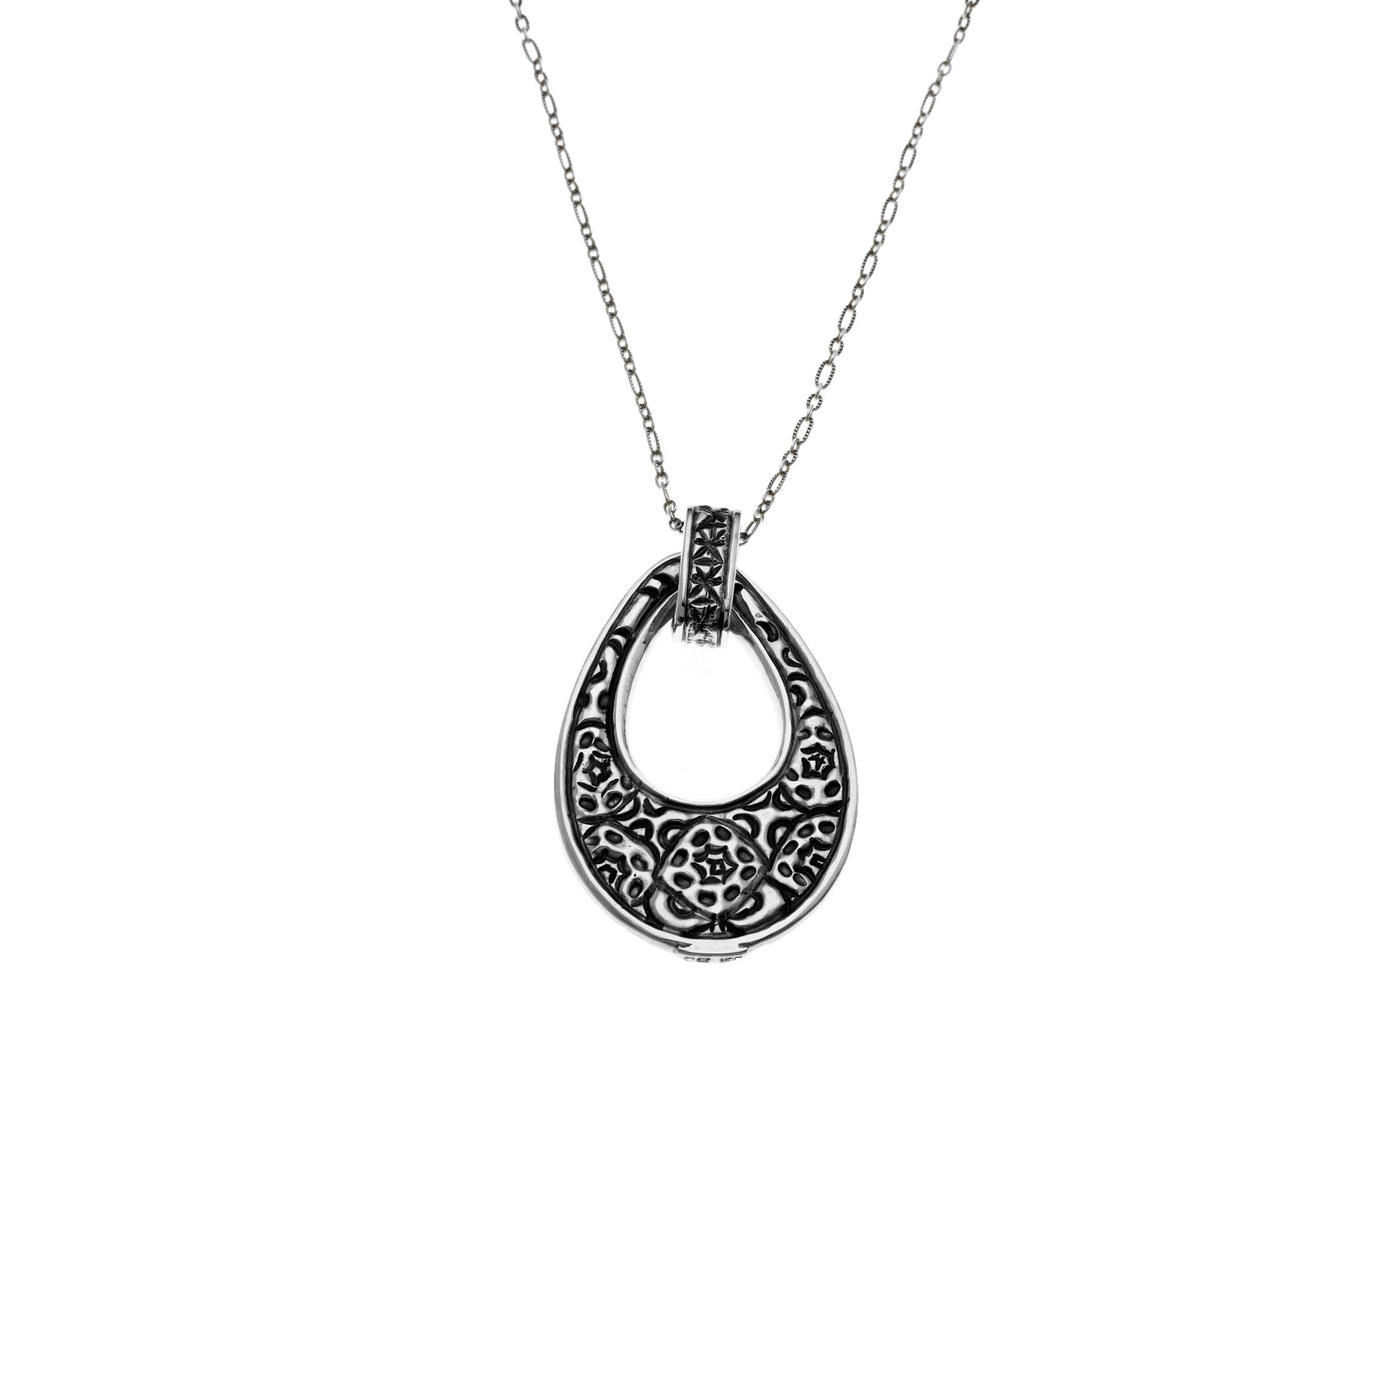 Wiener Werkstatte Reversible Oval Necklace - Cynthia Gale New York Jewelry